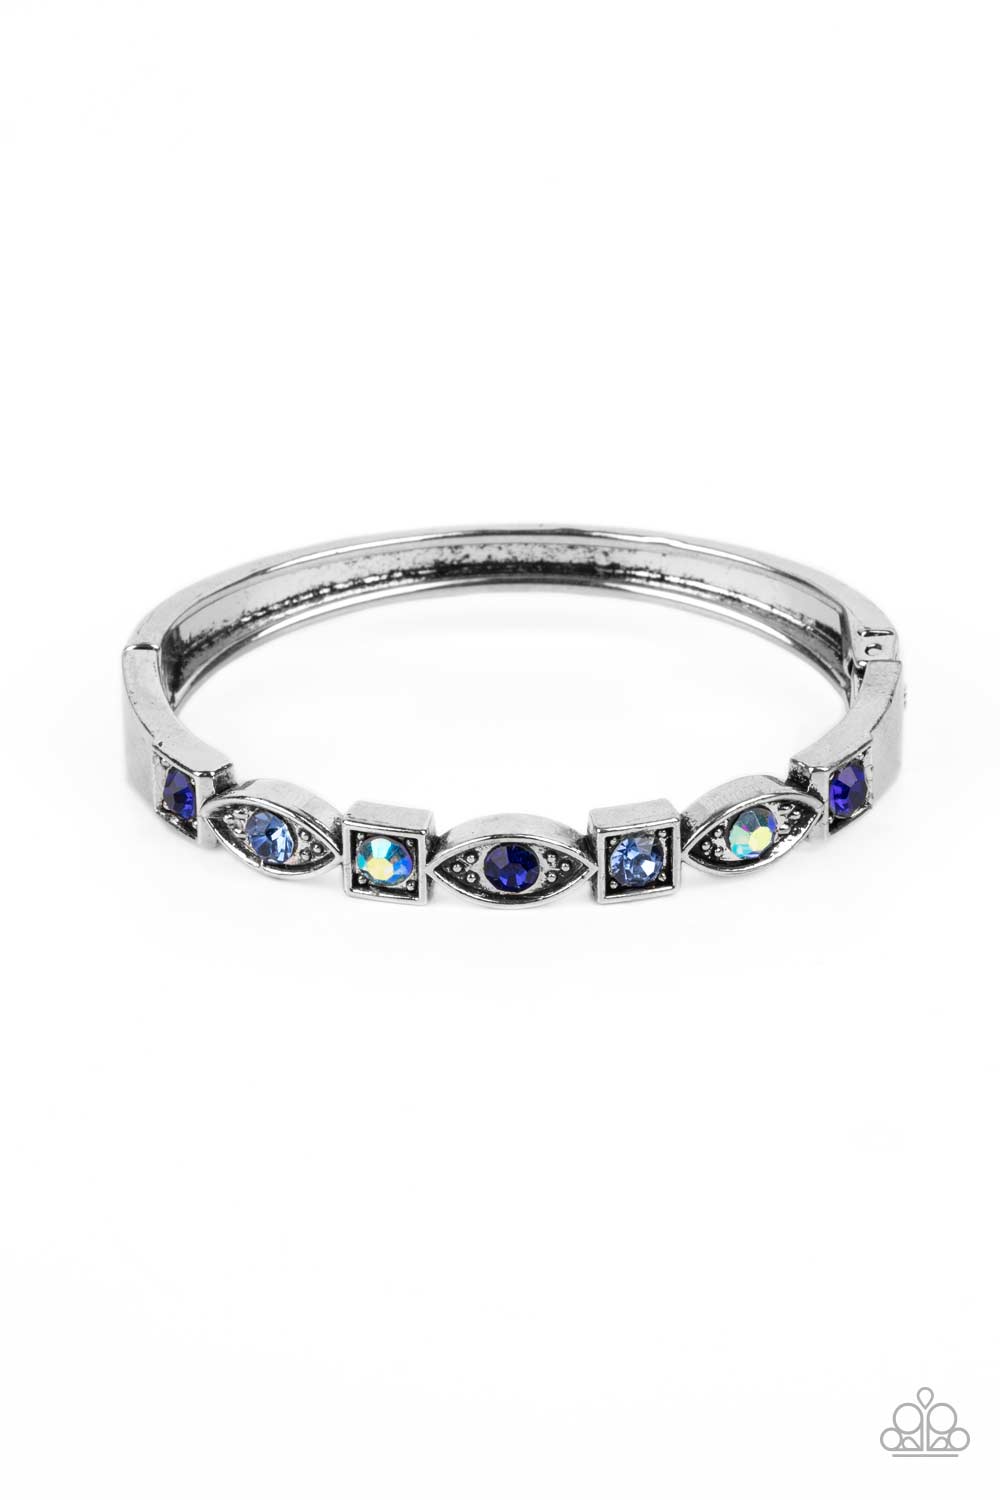 Poetically Picturesque Blue Rhinestone Bracelet - Paparazzi Accessories- lightbox - CarasShop.com - $5 Jewelry by Cara Jewels